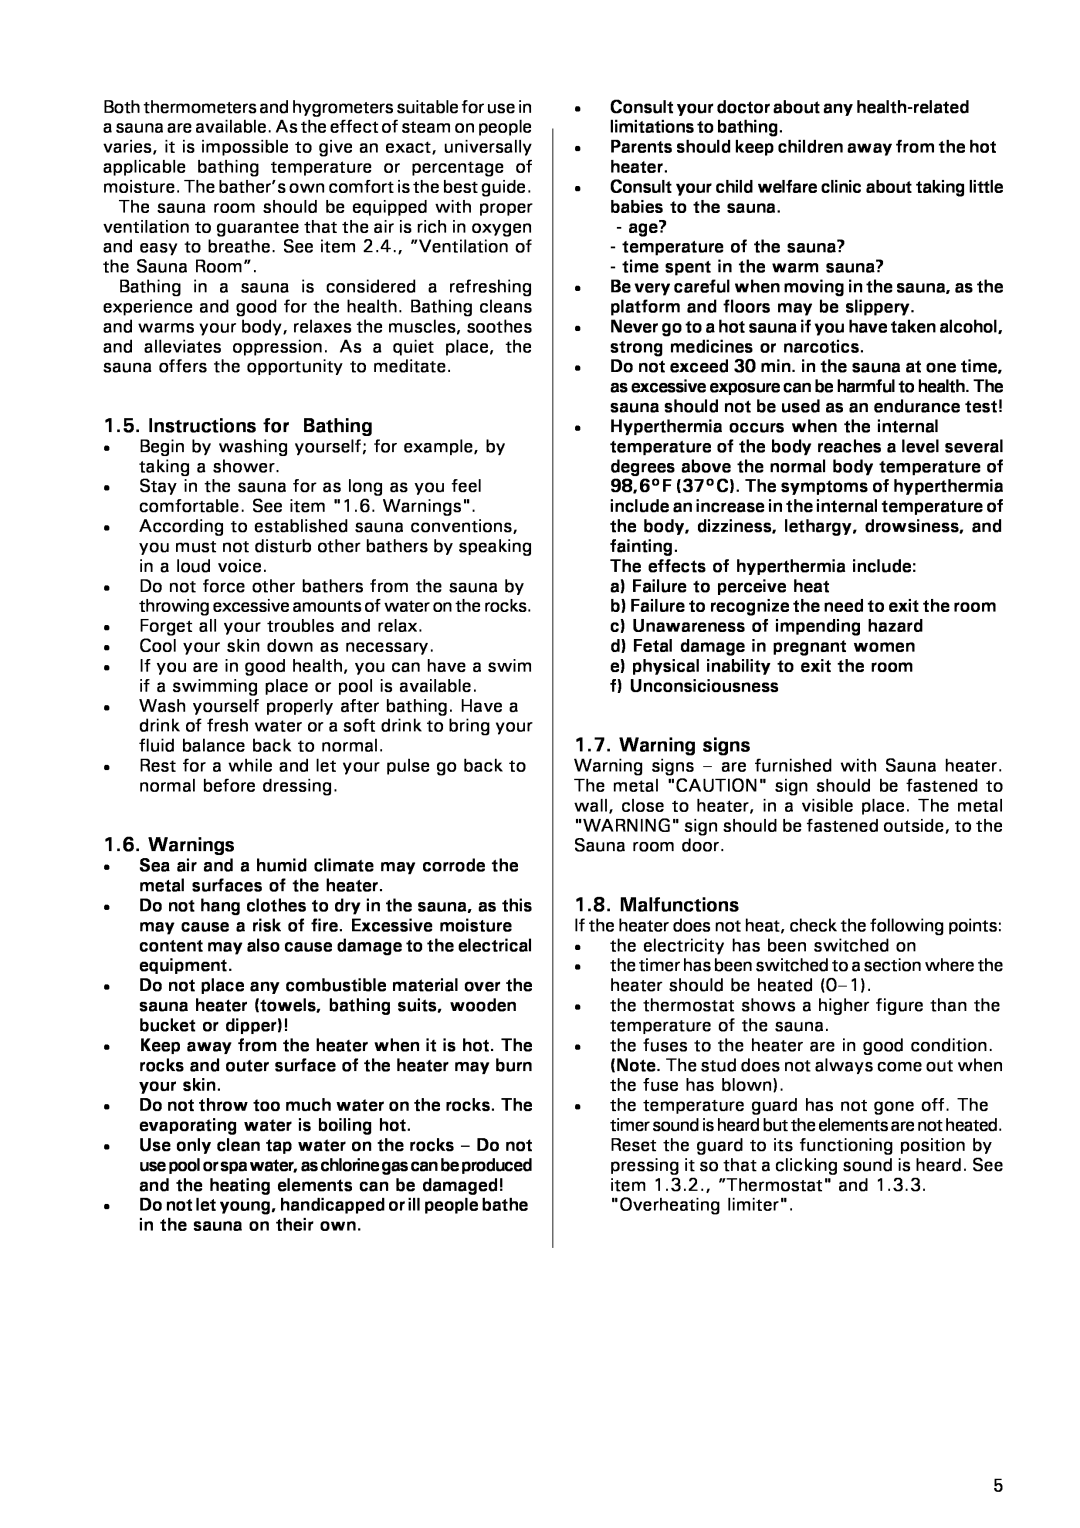 Finlandia JM-20, JM-30, JM-17 manual Instructions for Bathing, Warnings, Warning signs, Malfunctions 